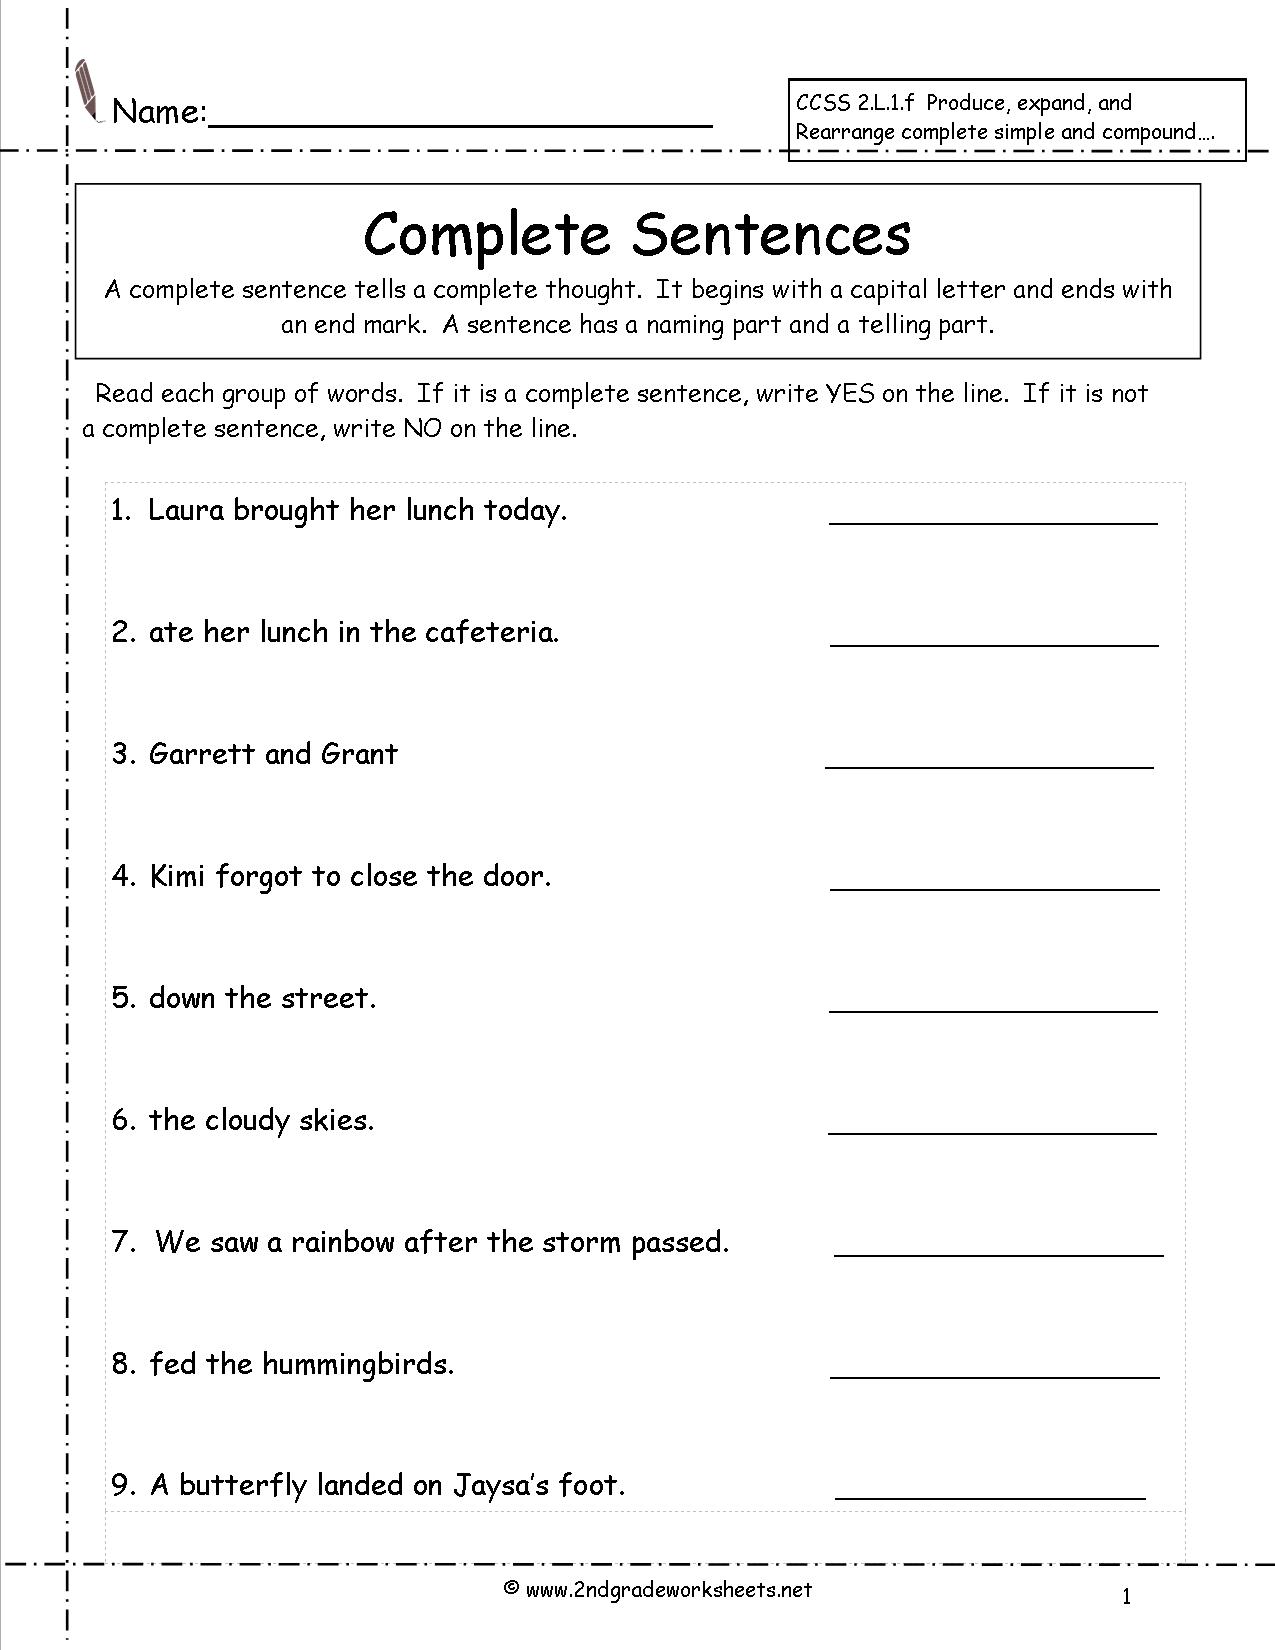 12-best-images-of-2nd-grade-compound-words-worksheets-second-grade